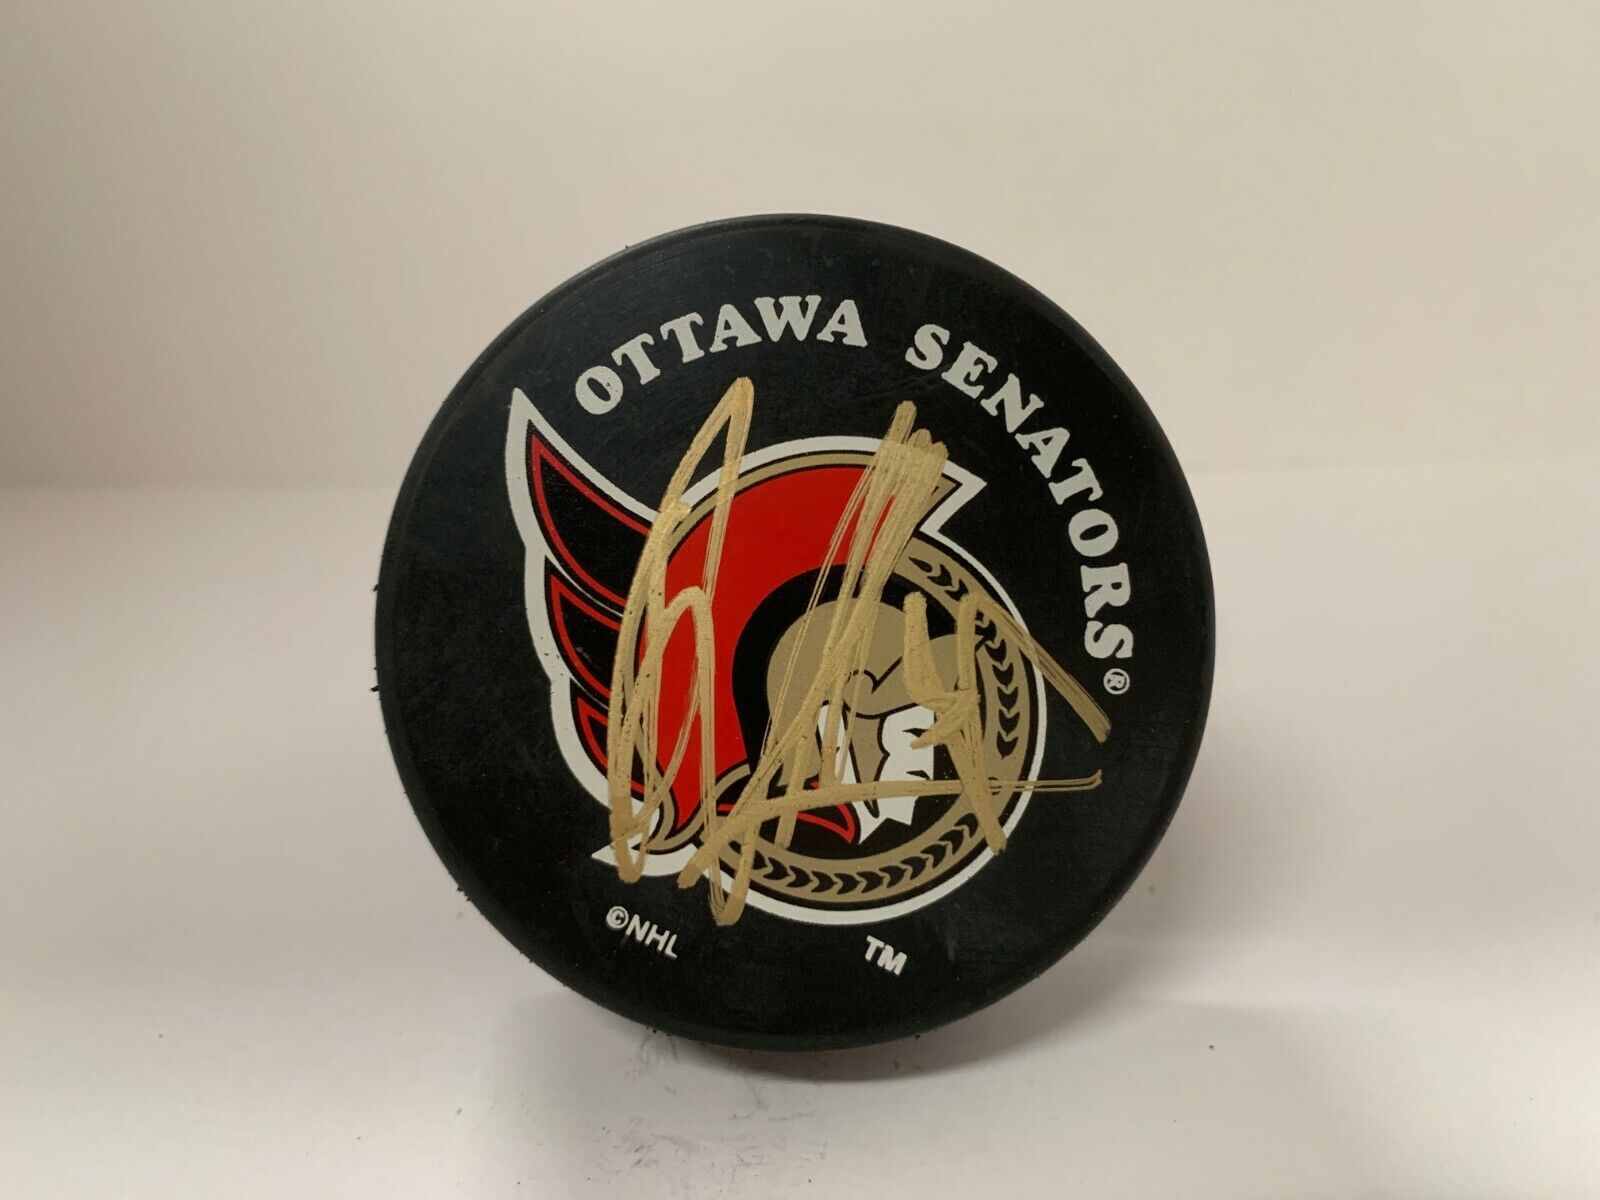 Radek Bonk Autographed Signed Ottawa Senators Hockey Puck W/ ASCF COA